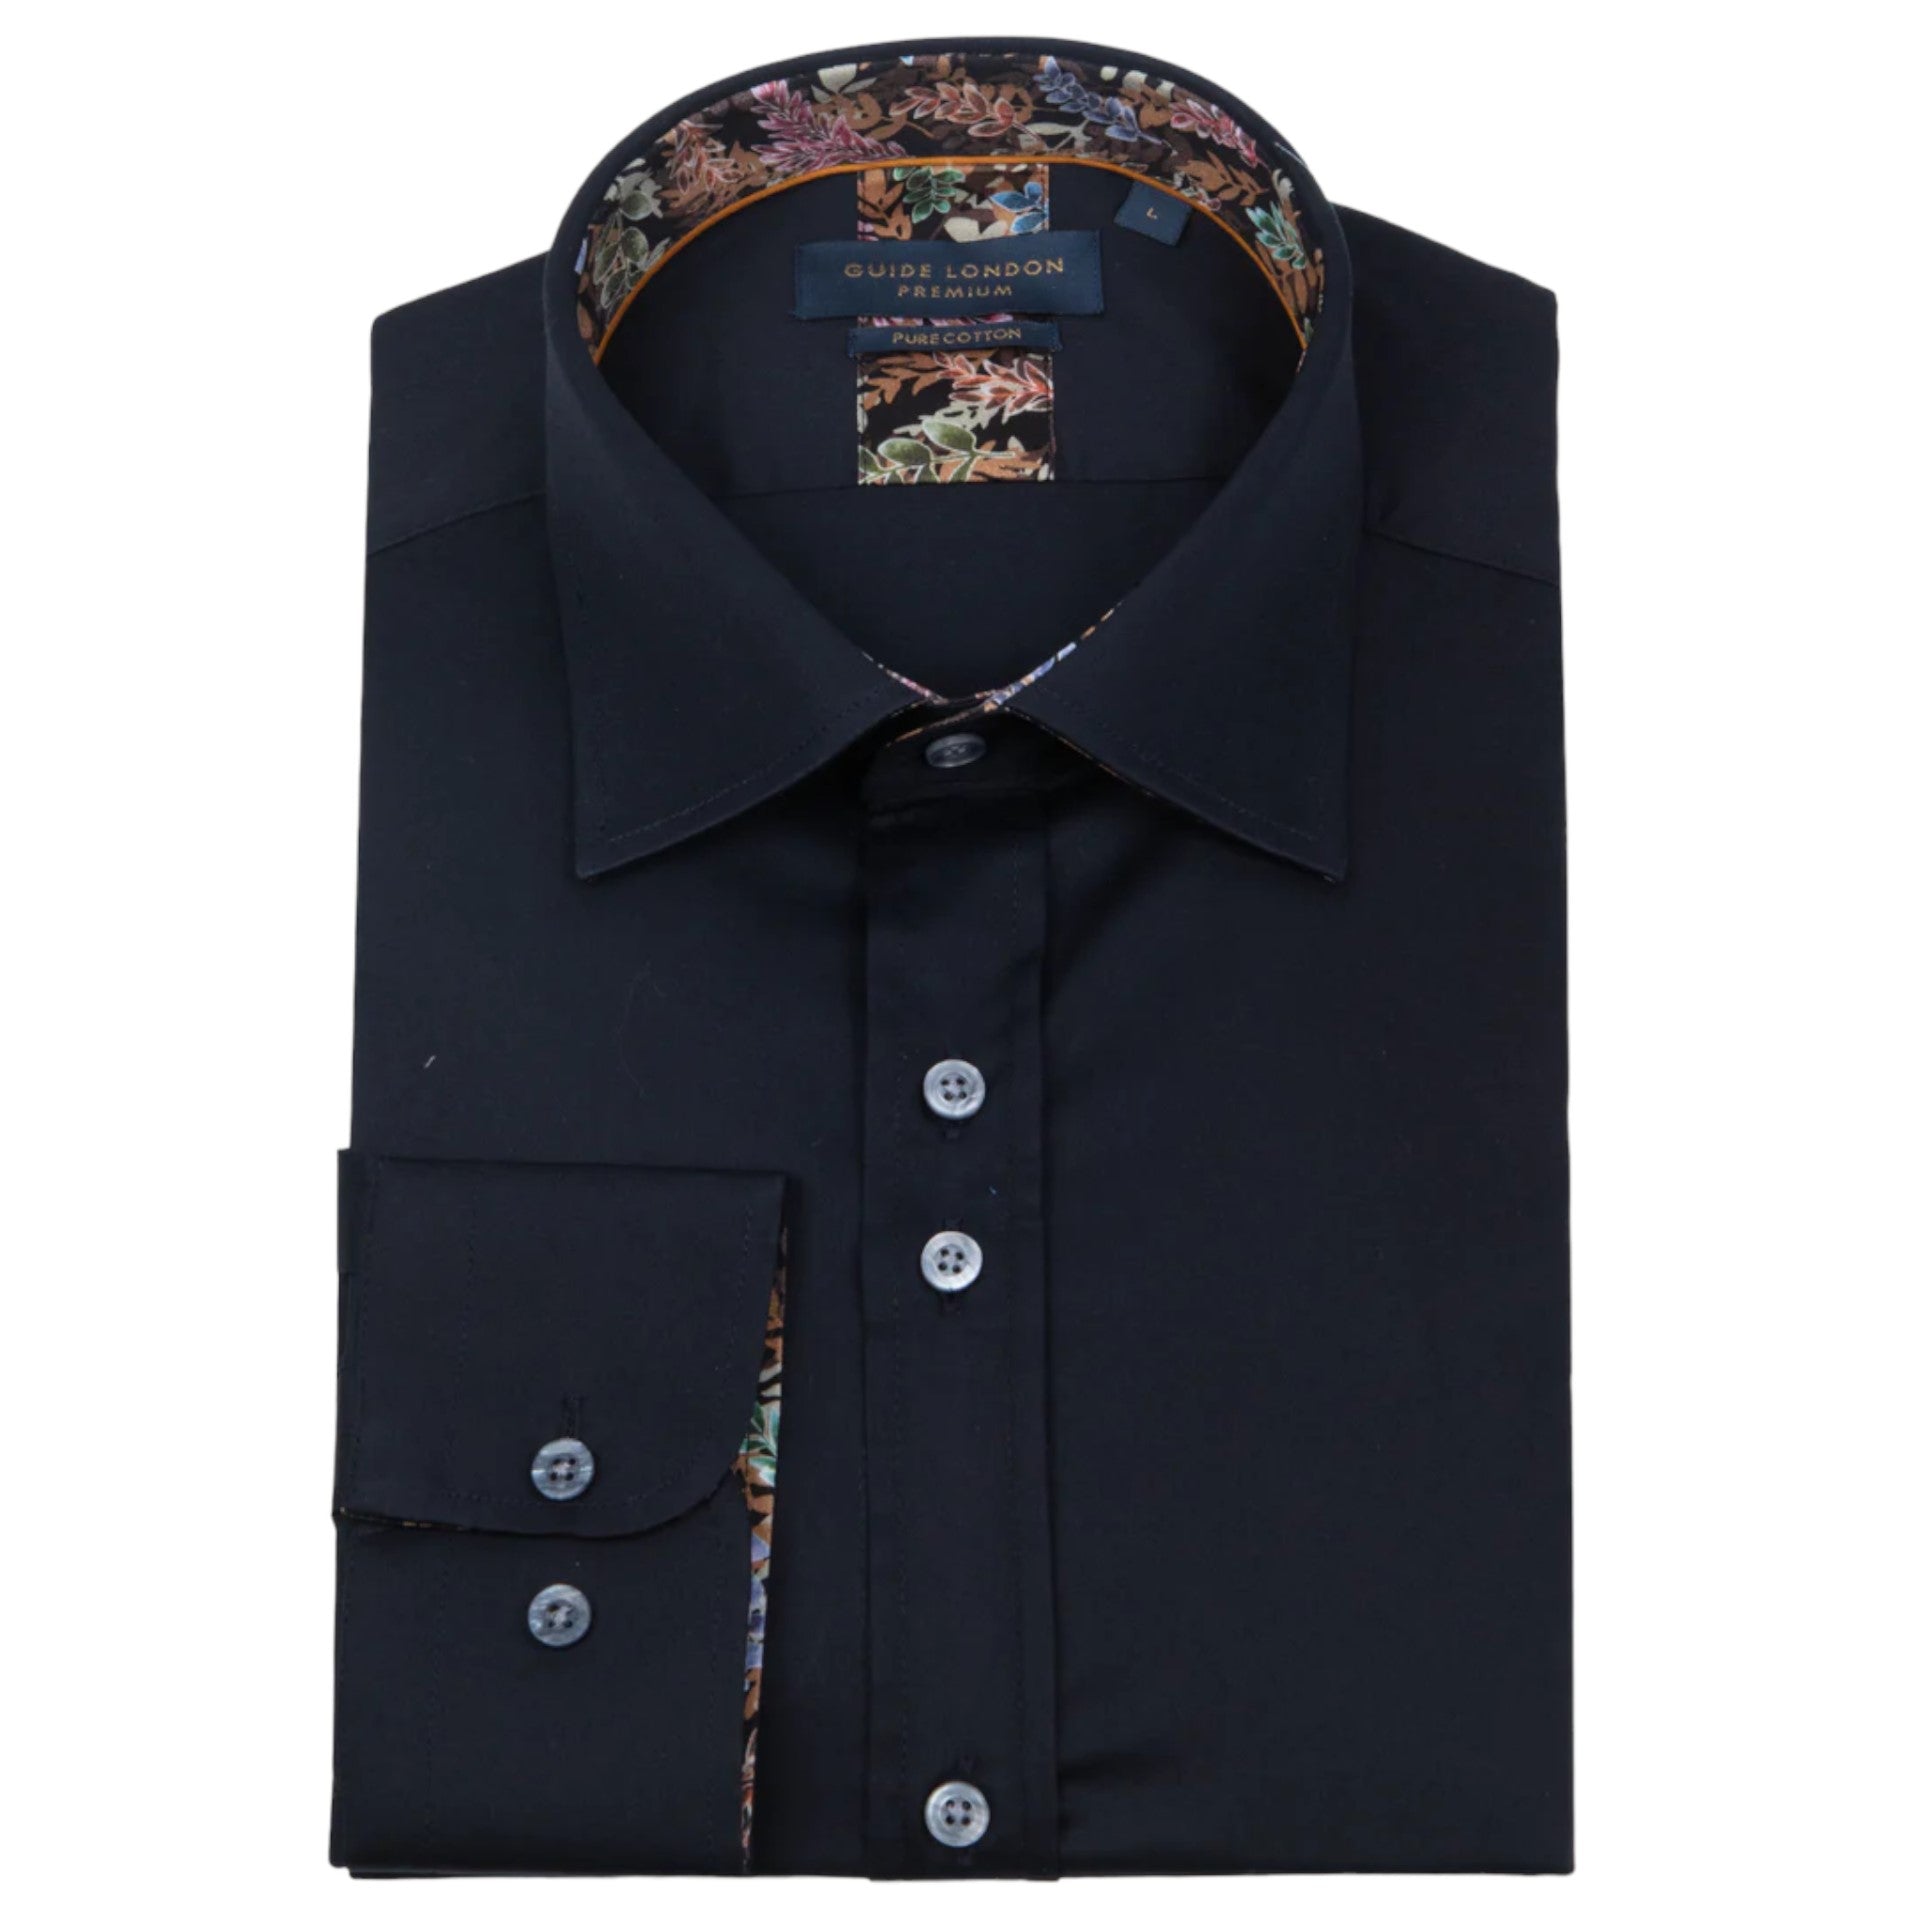 Guide London Long Sleeve Navy Cotton Shirt (LS76784)